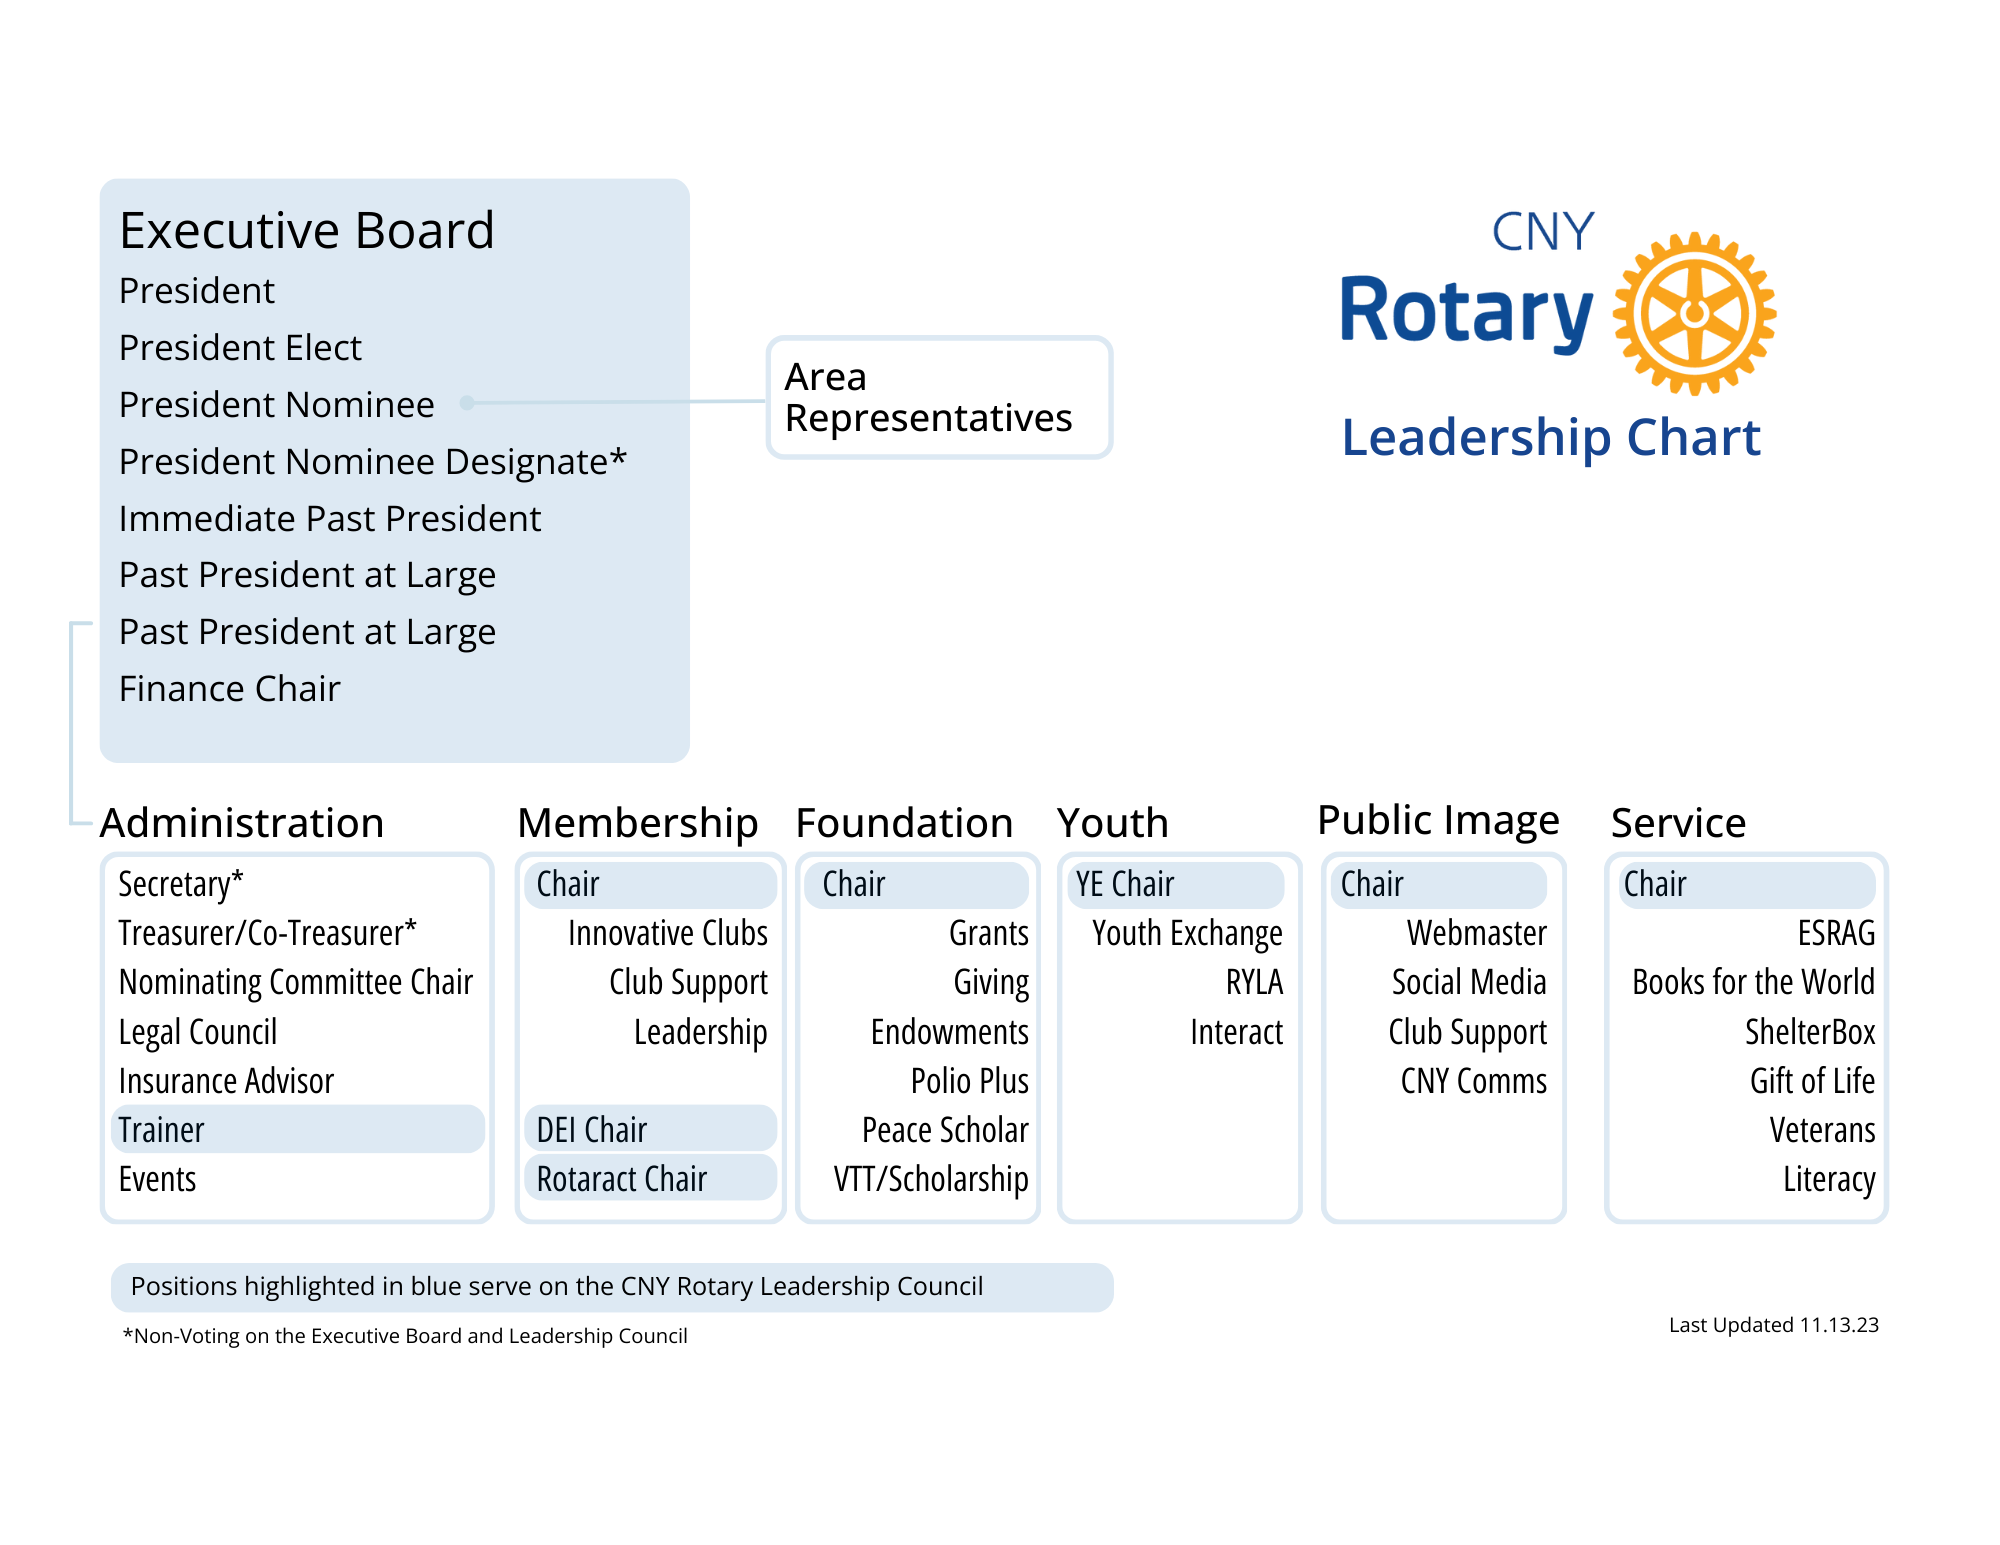 CNY Rotary Organizational Chart